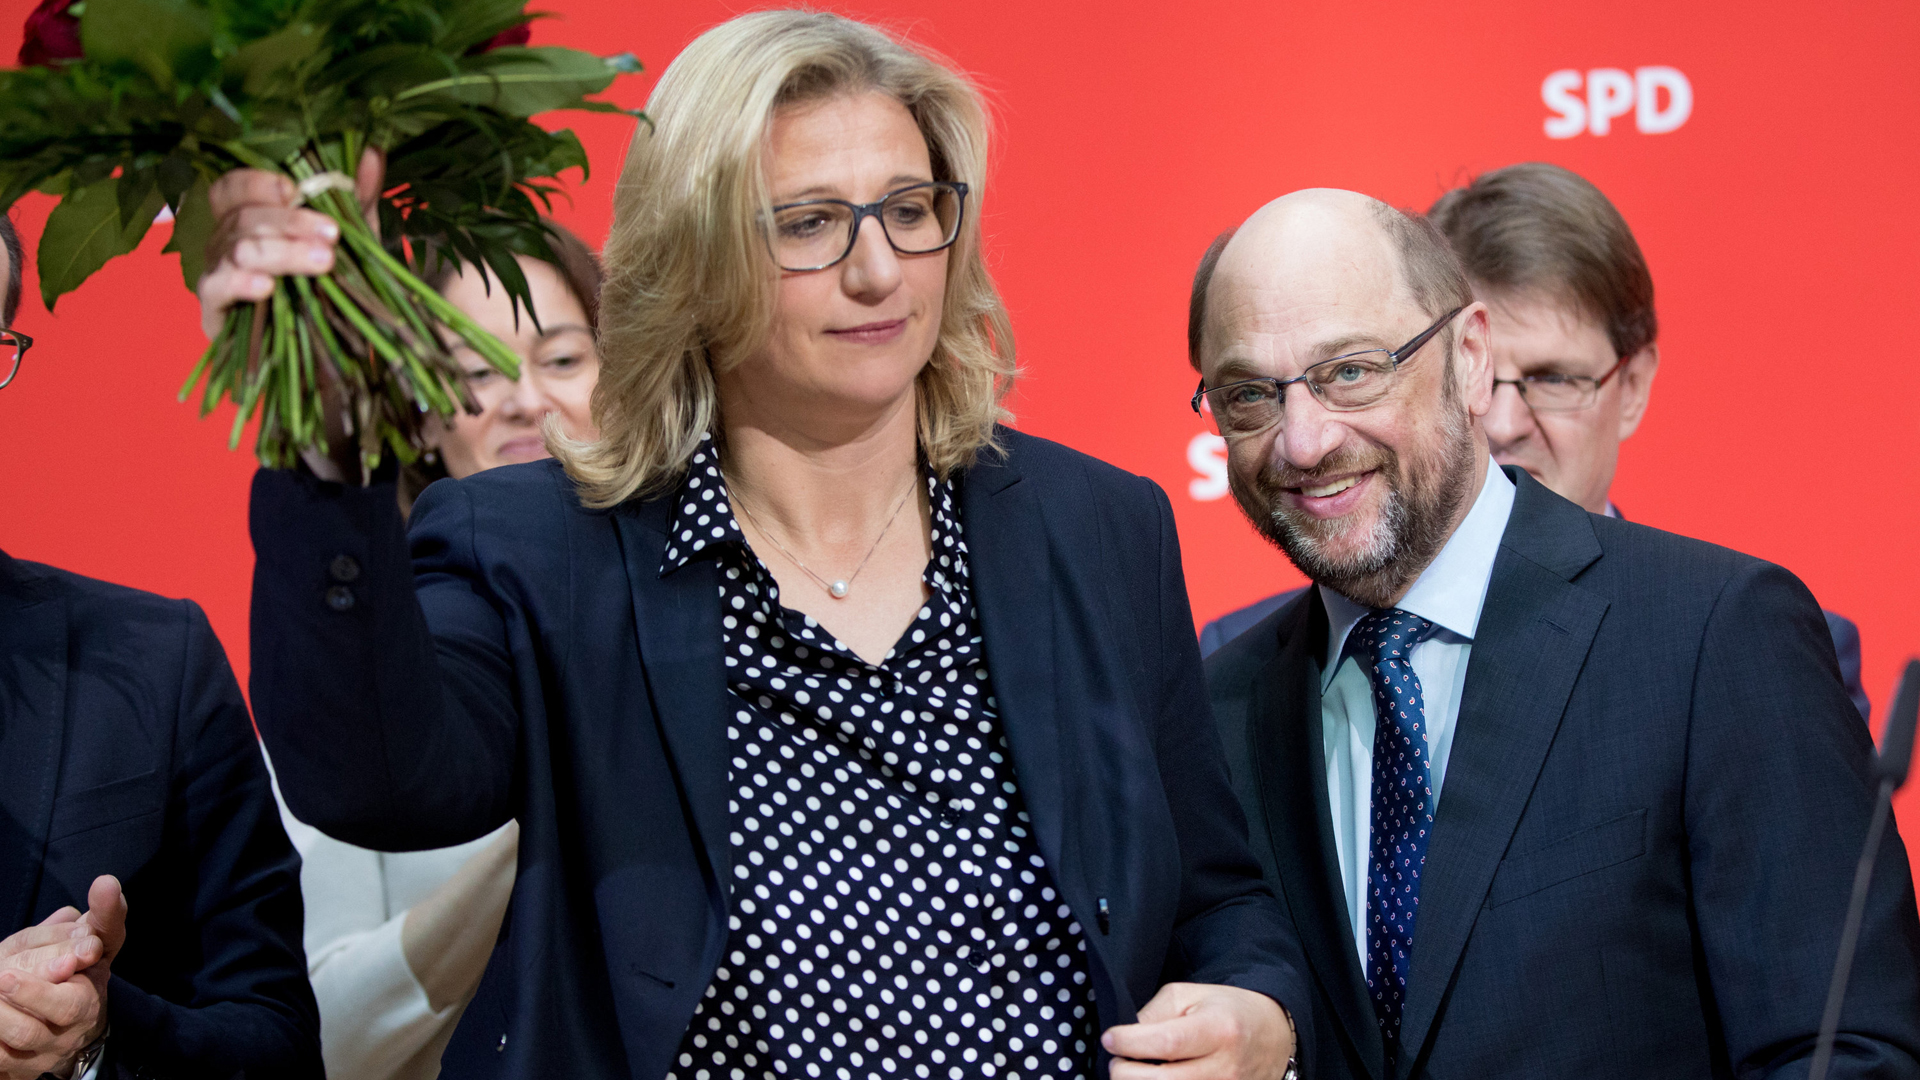  Anke Rehlinger neben Martin Schulz  | dpa